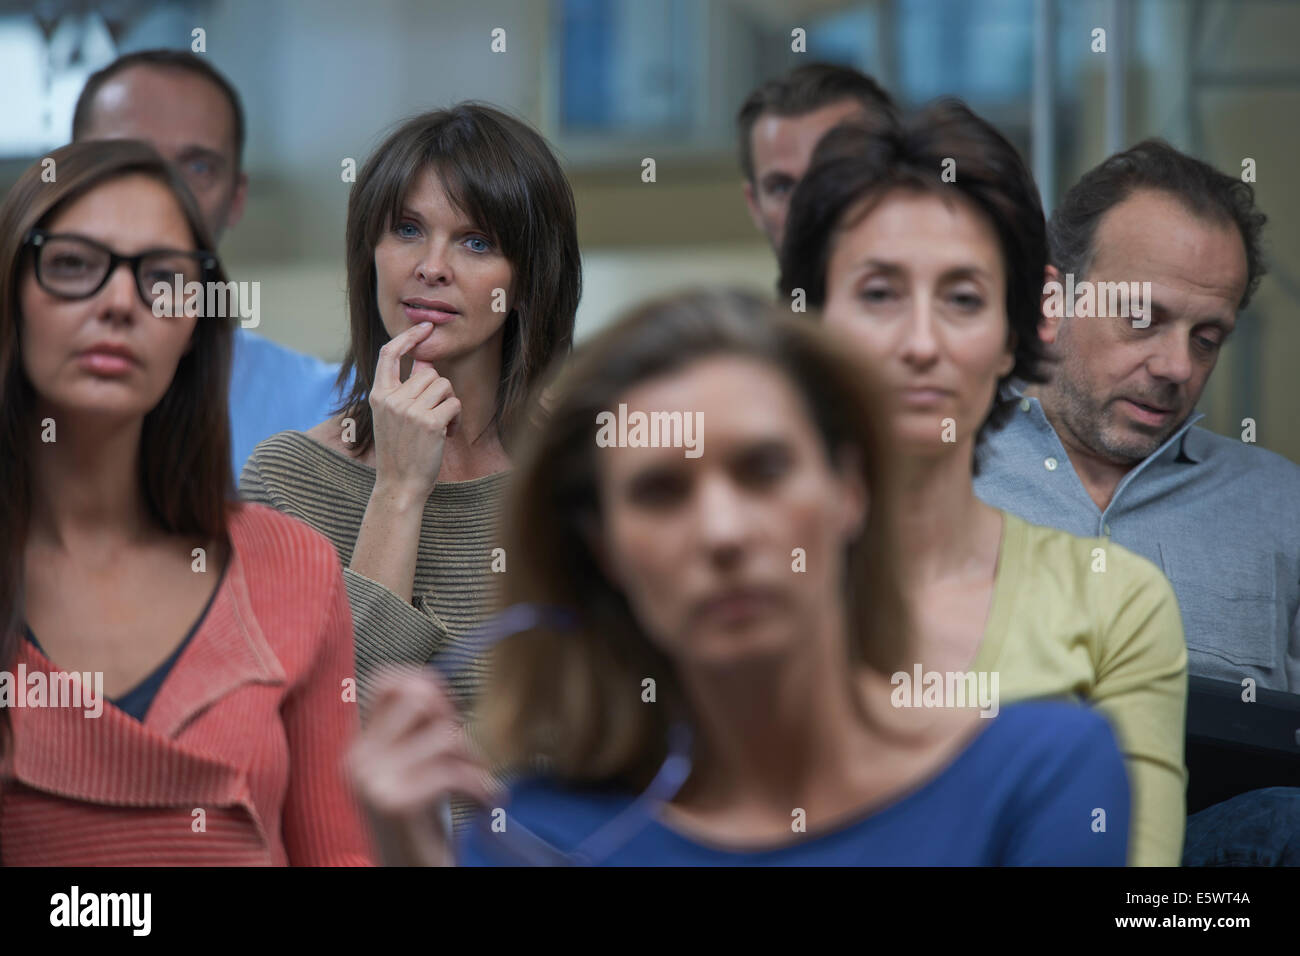 Group watching presentation Stock Photo